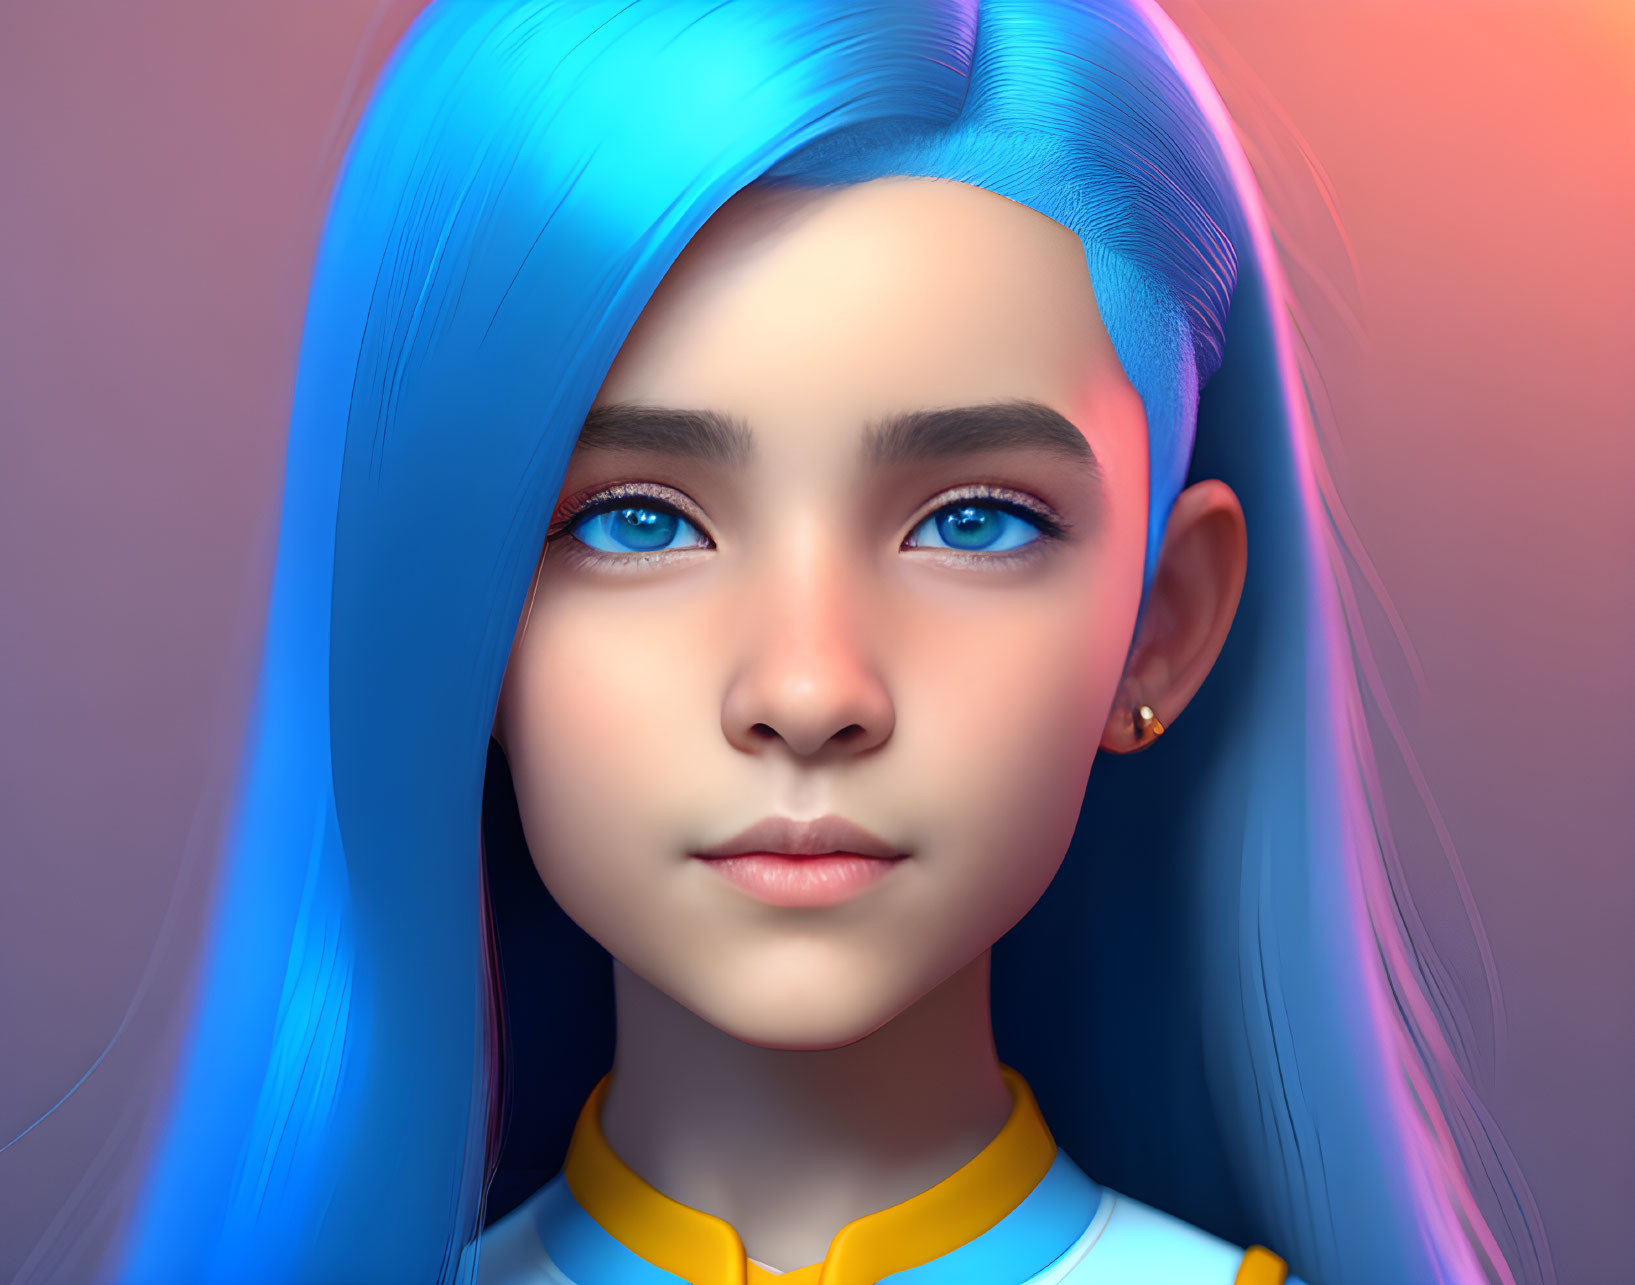 Vibrant digital portrait: girl with blue hair, bright eyes, subtle smile, on purple background